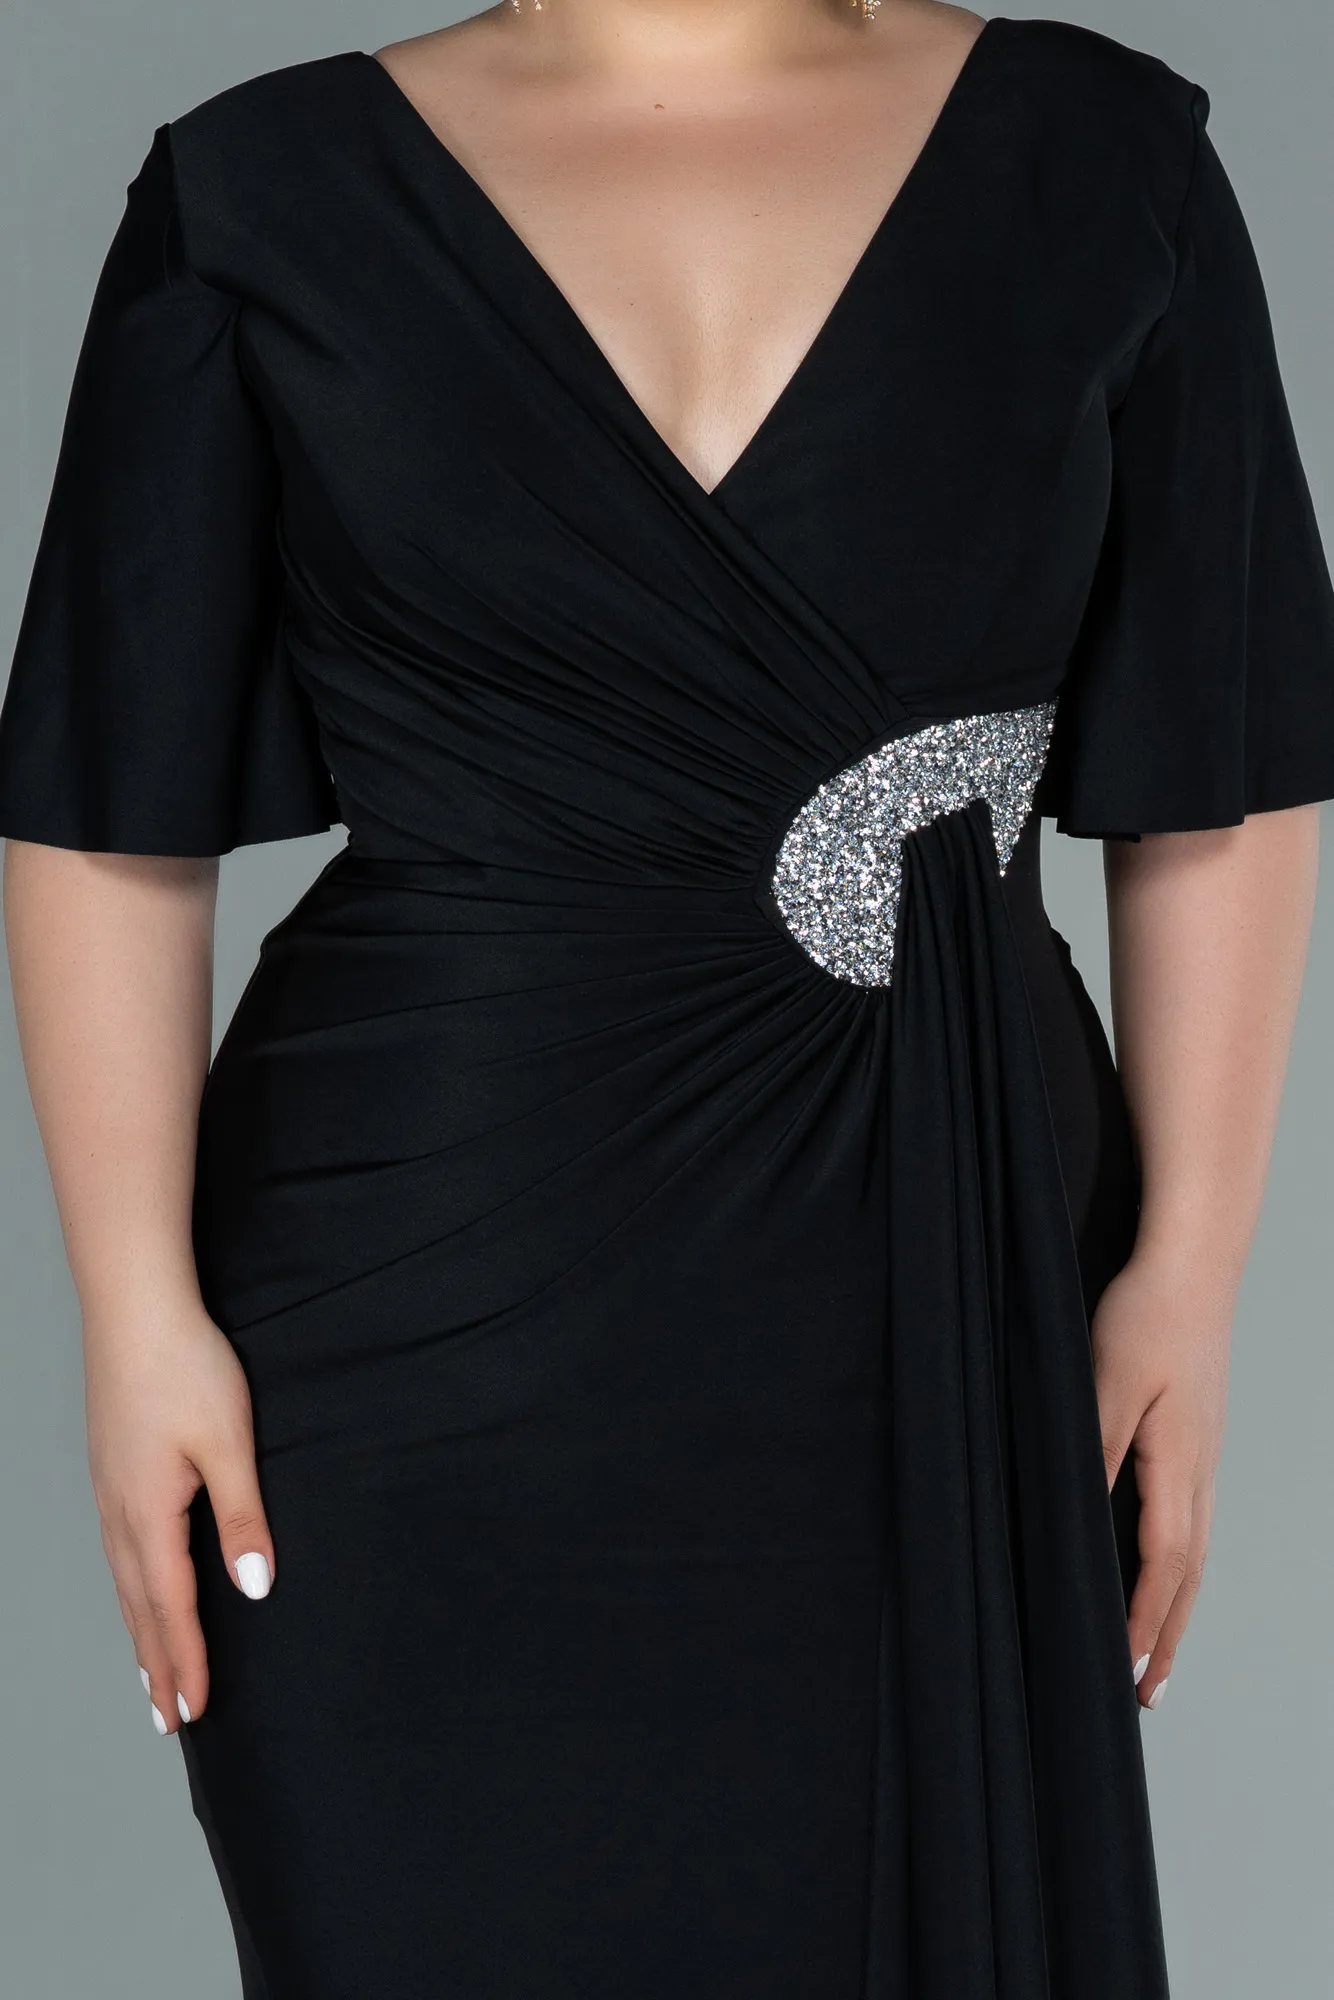 Black-Long Plus Size Evening Dress ABU2441